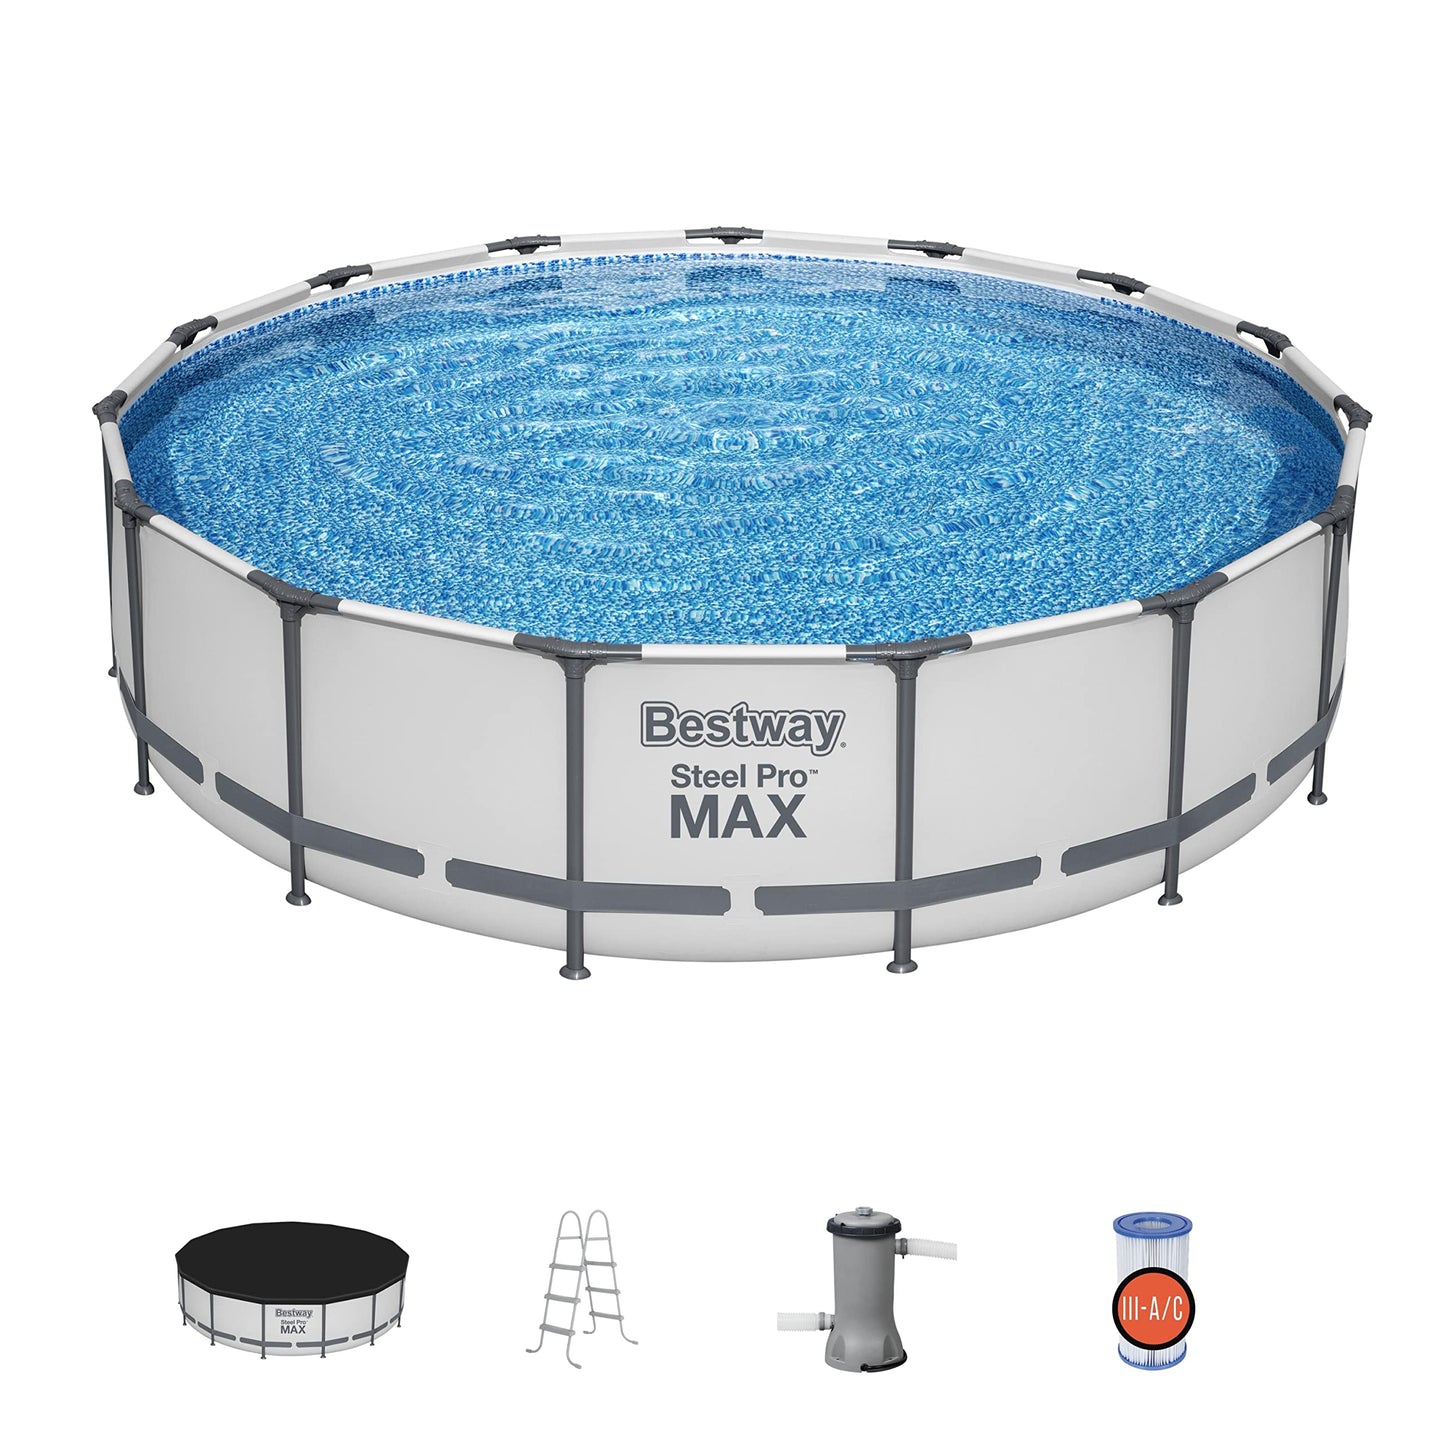 Bestway: Steel Pro MAX 15' X 42" Above Ground Pool Set